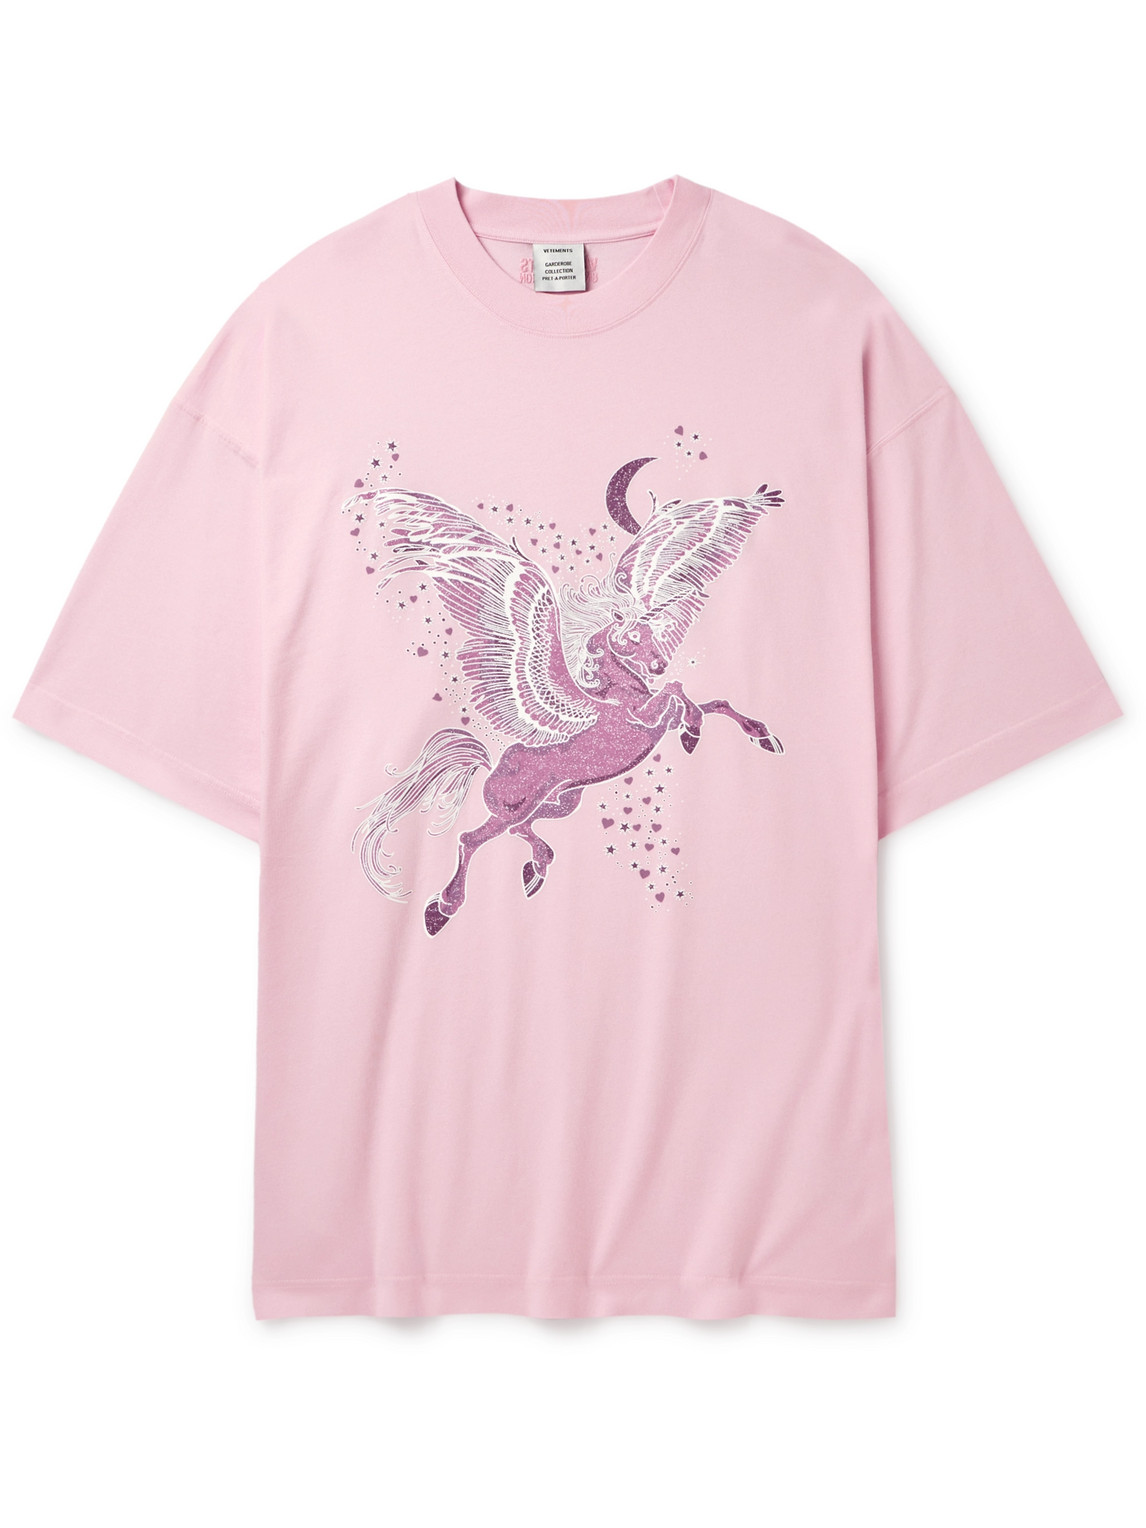 VETEMENTS - Flying Unicorn Oversized Printed Cotton-Jersey T-Shirt - Men - Pink - XS von VETEMENTS